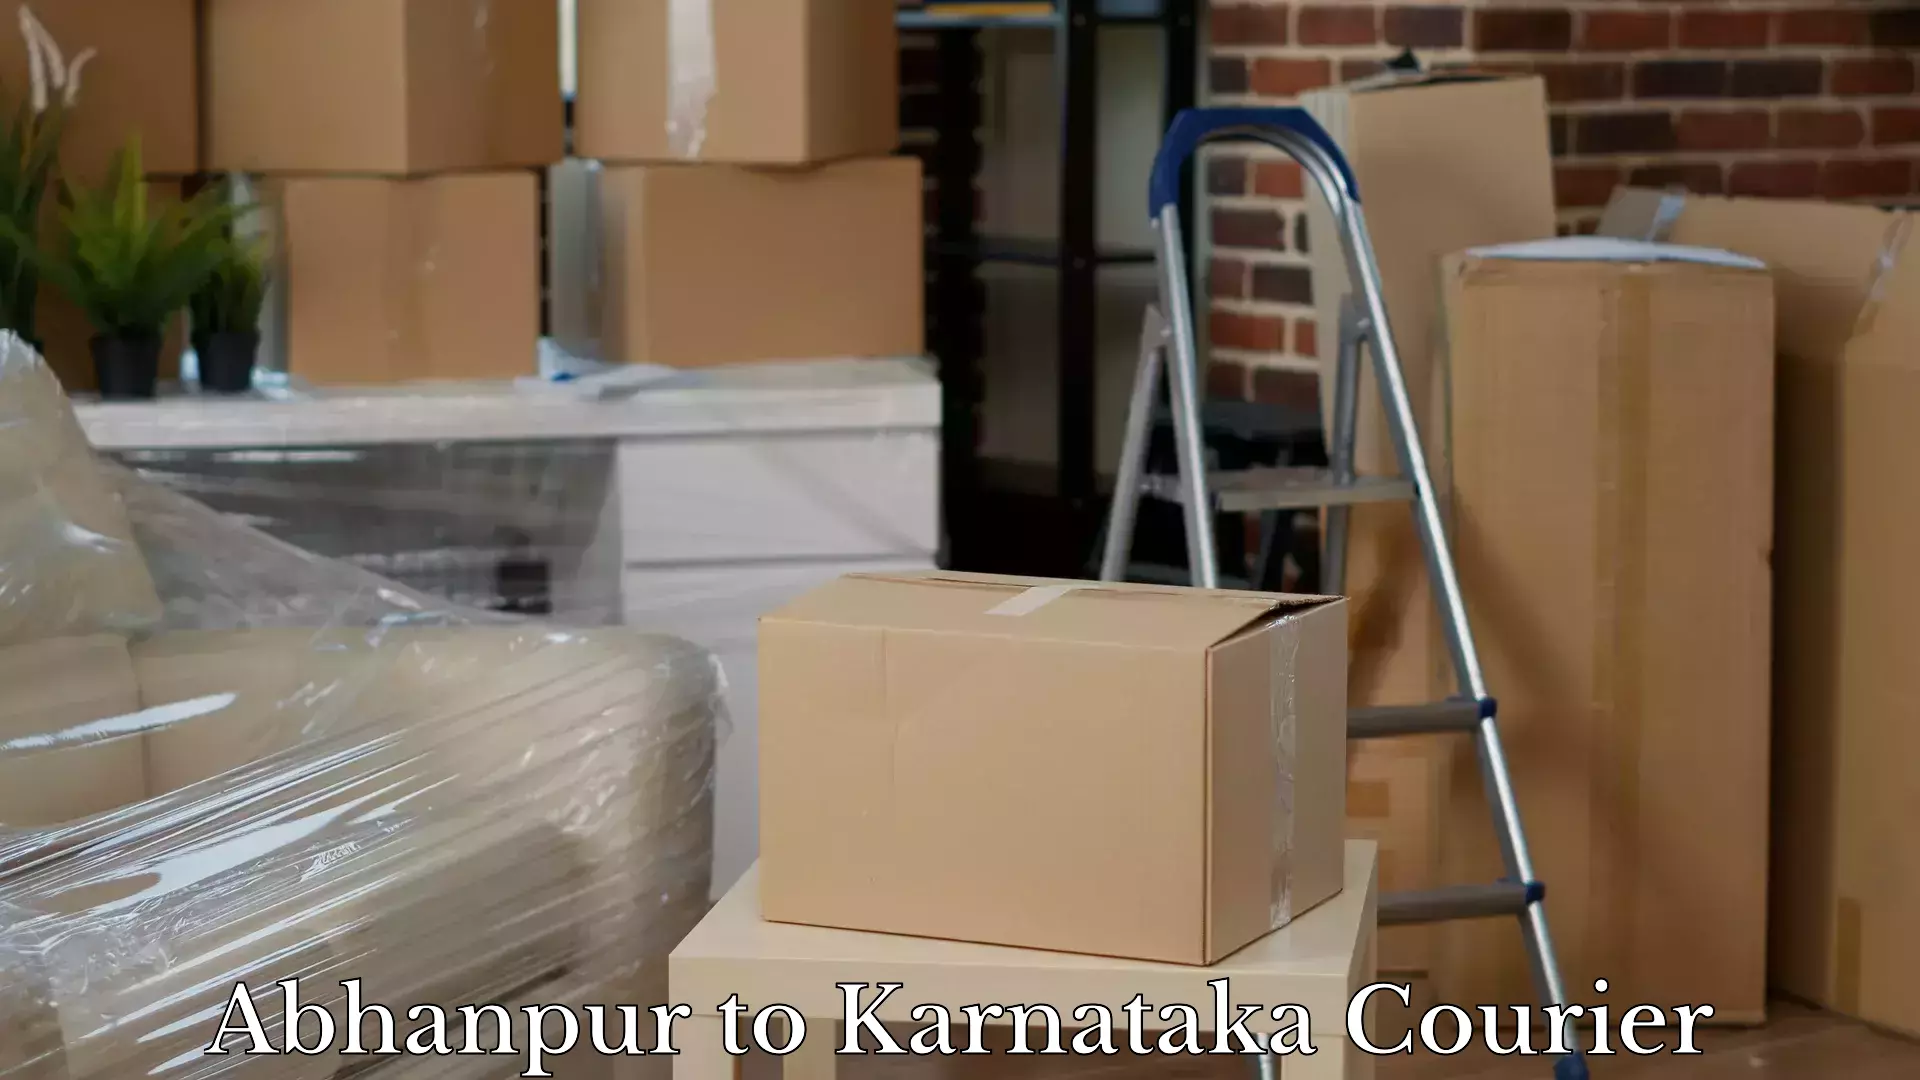 Luggage transport consulting Abhanpur to Karnataka